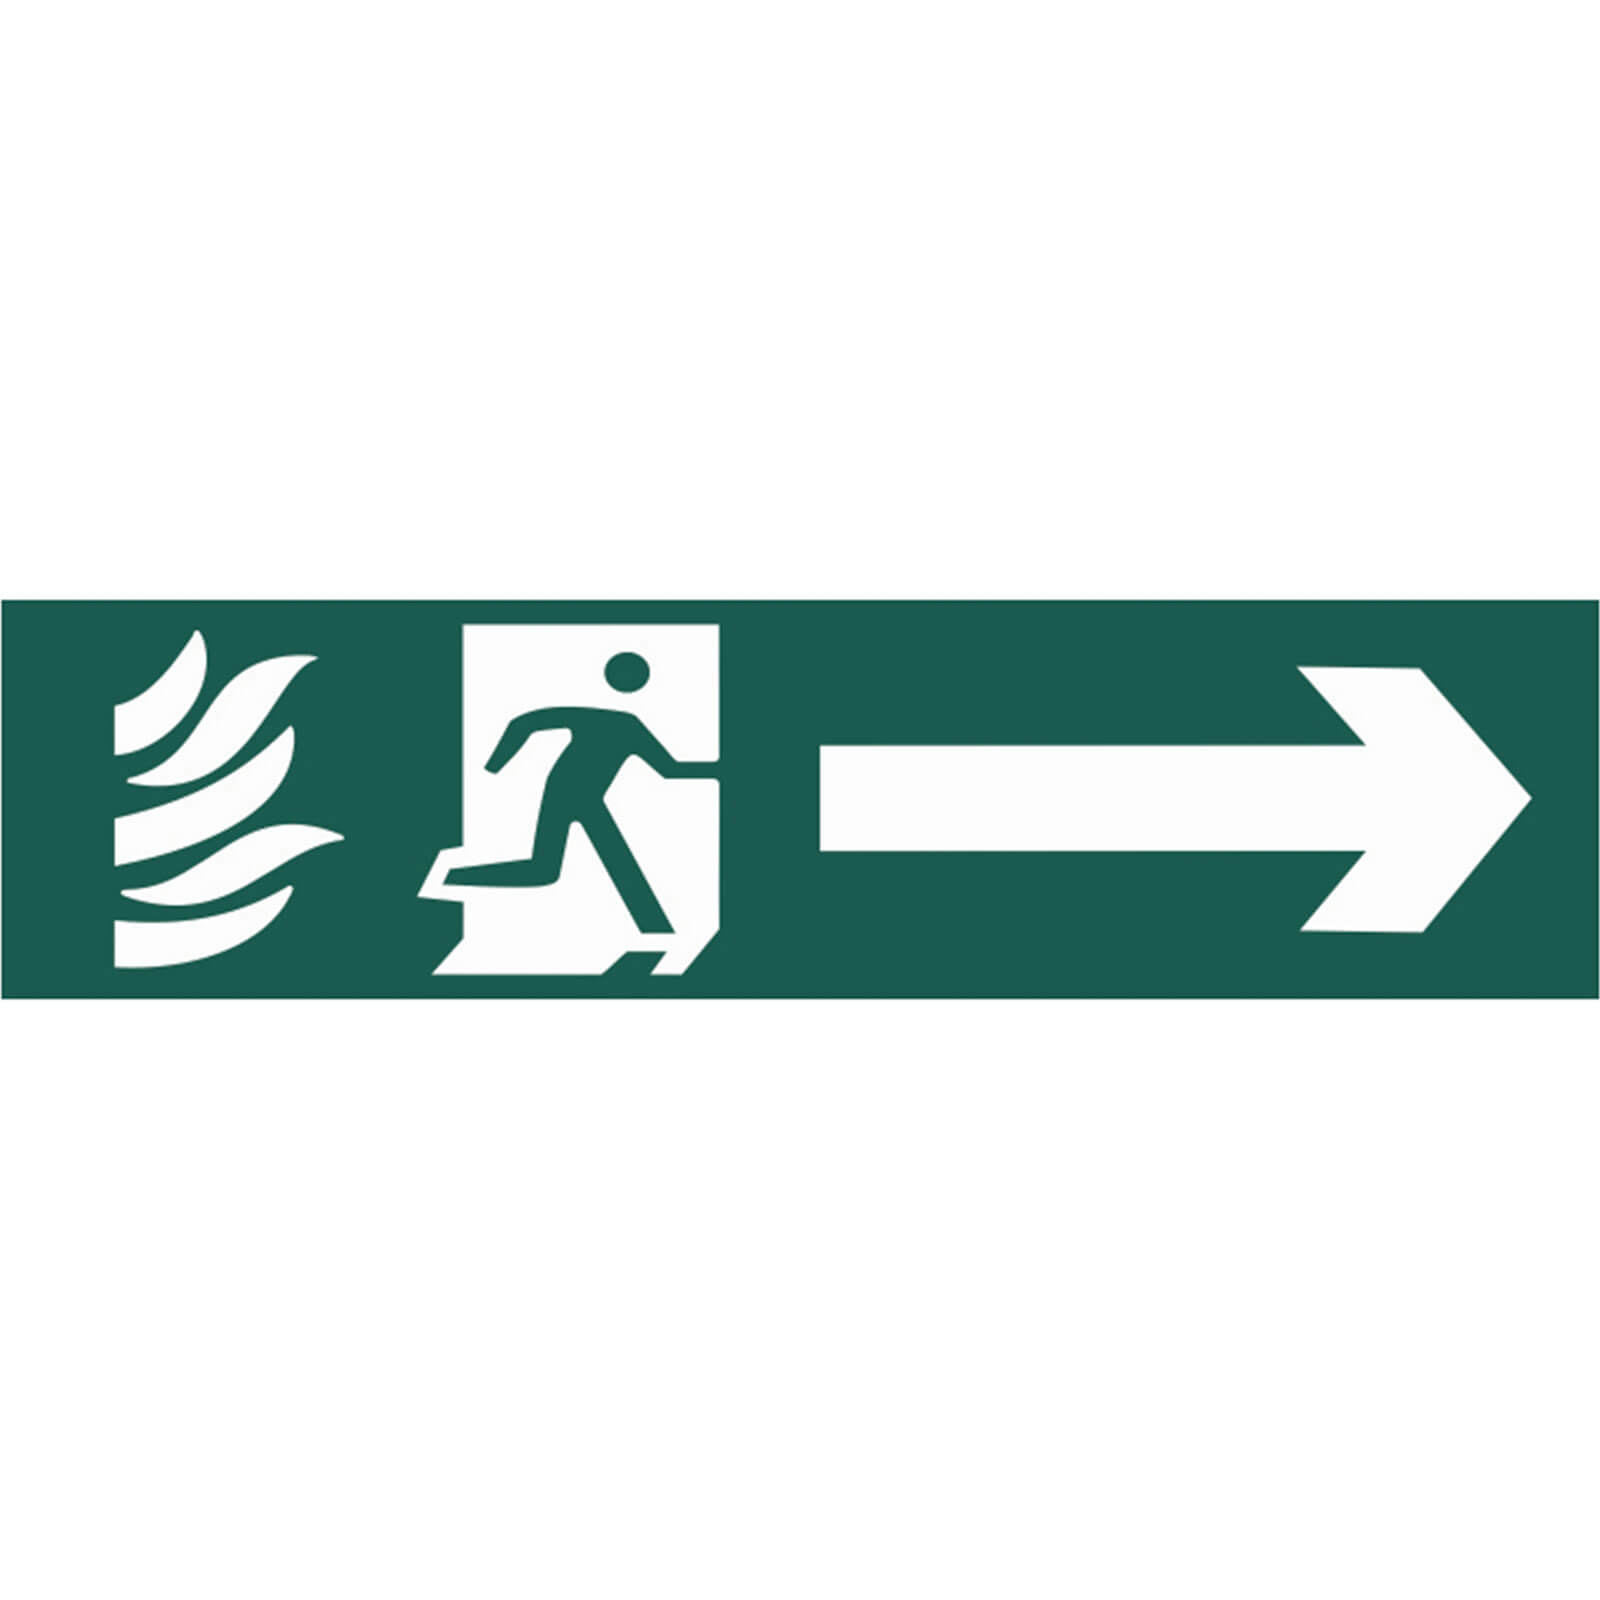 Image of Scan Running Man Arrow Right Sign 200mm 50mm Standard